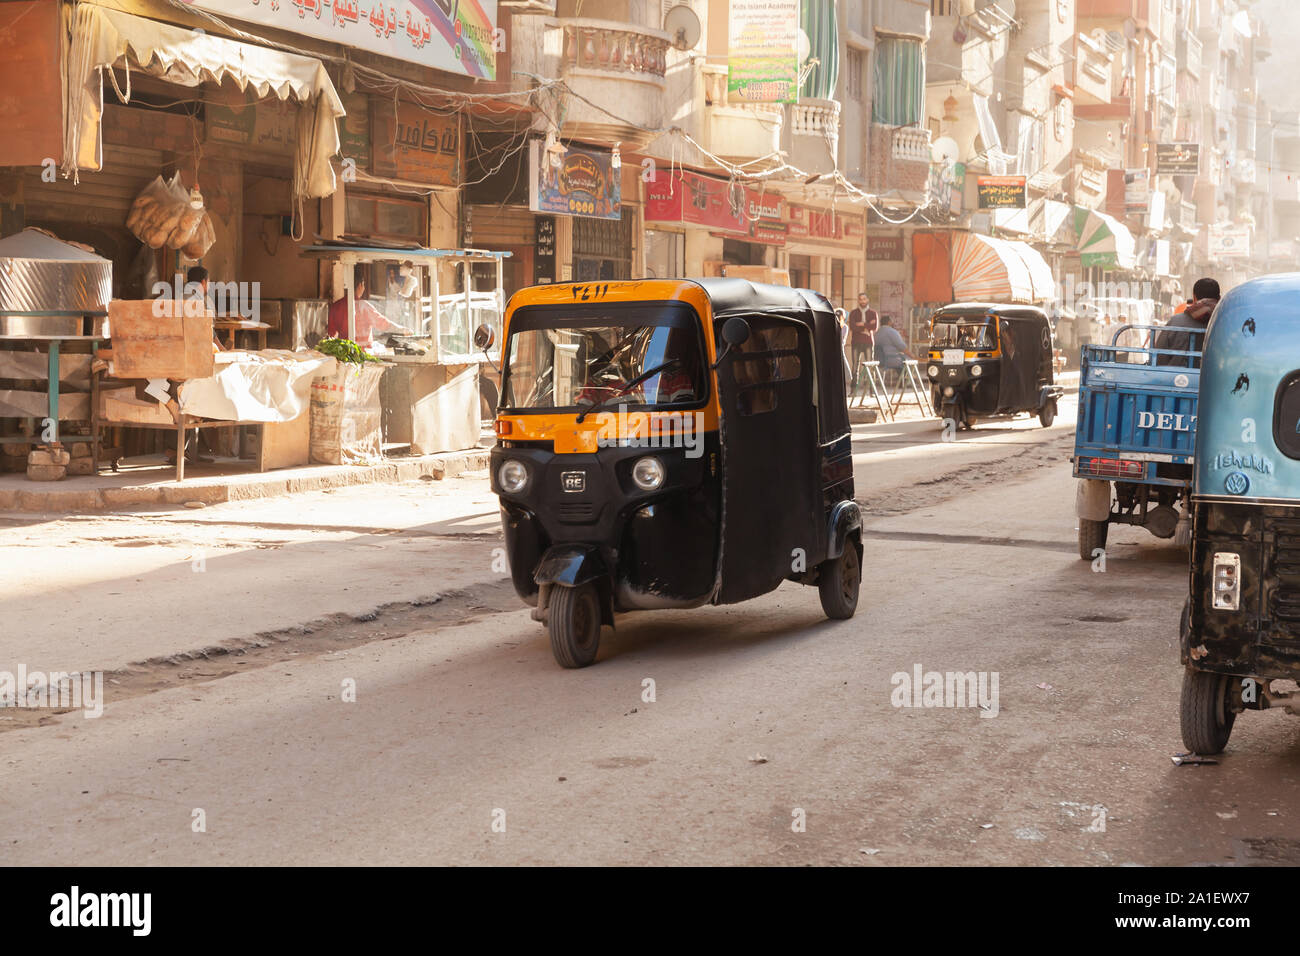 Alexandria, Egypt - December 18, 2018: Street view of Alexandria, auto rickshaw is on the street, ordinary people walk the street Stock Photo